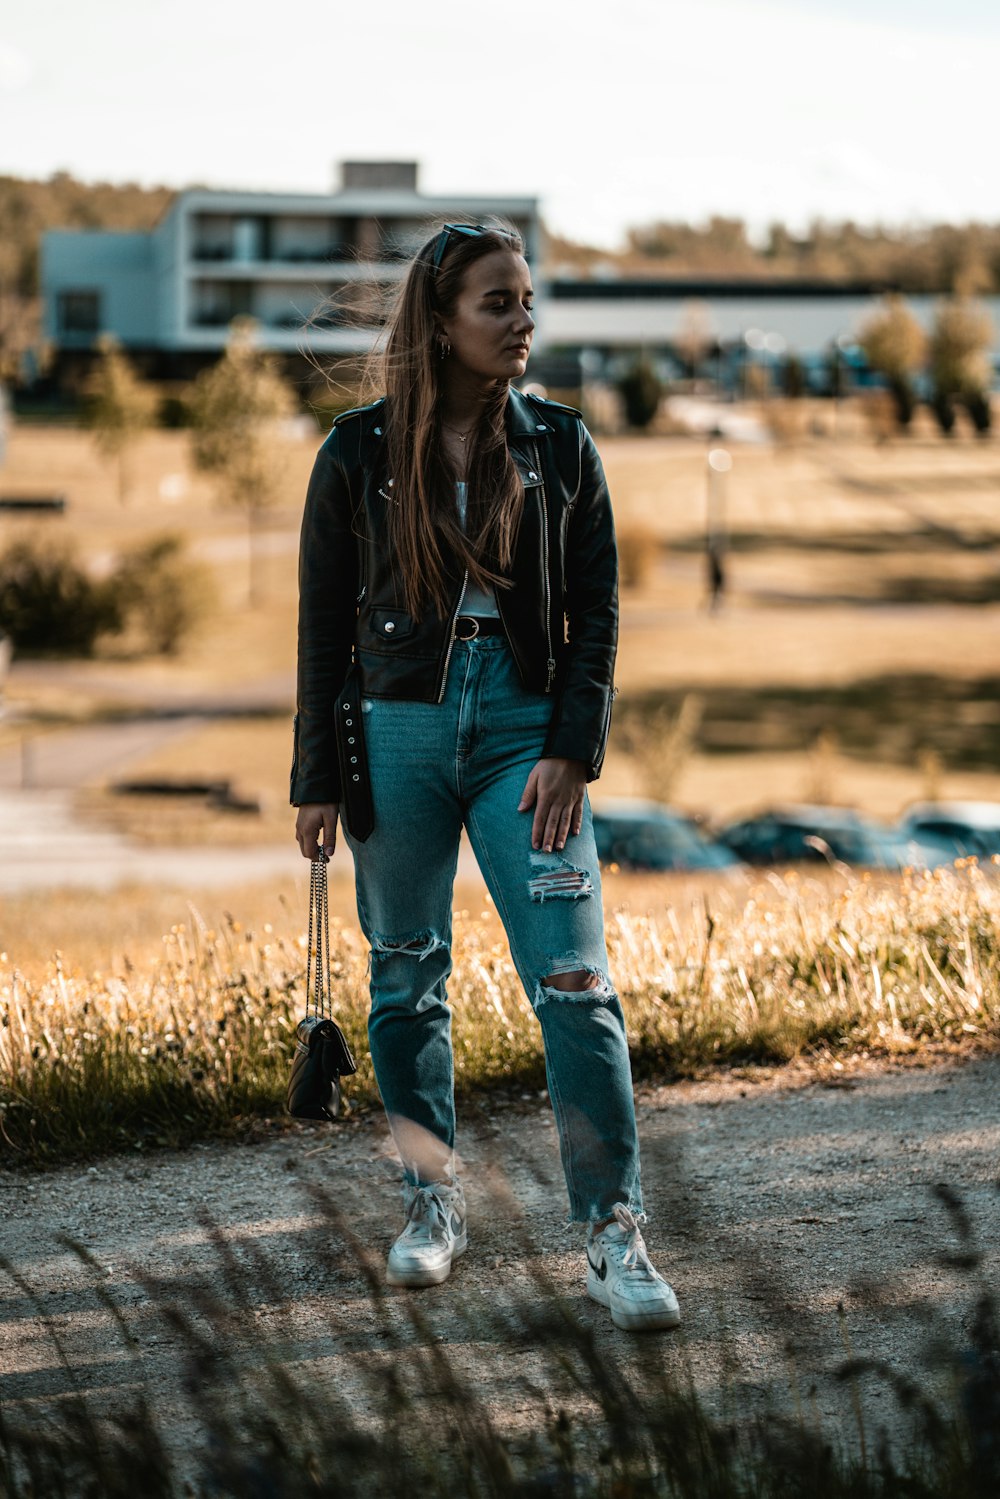 dynasti håndflade resterende Woman in black leather jacket and blue denim jeans walking on dirt road  during daytime photo – Free Deutschland Image on Unsplash